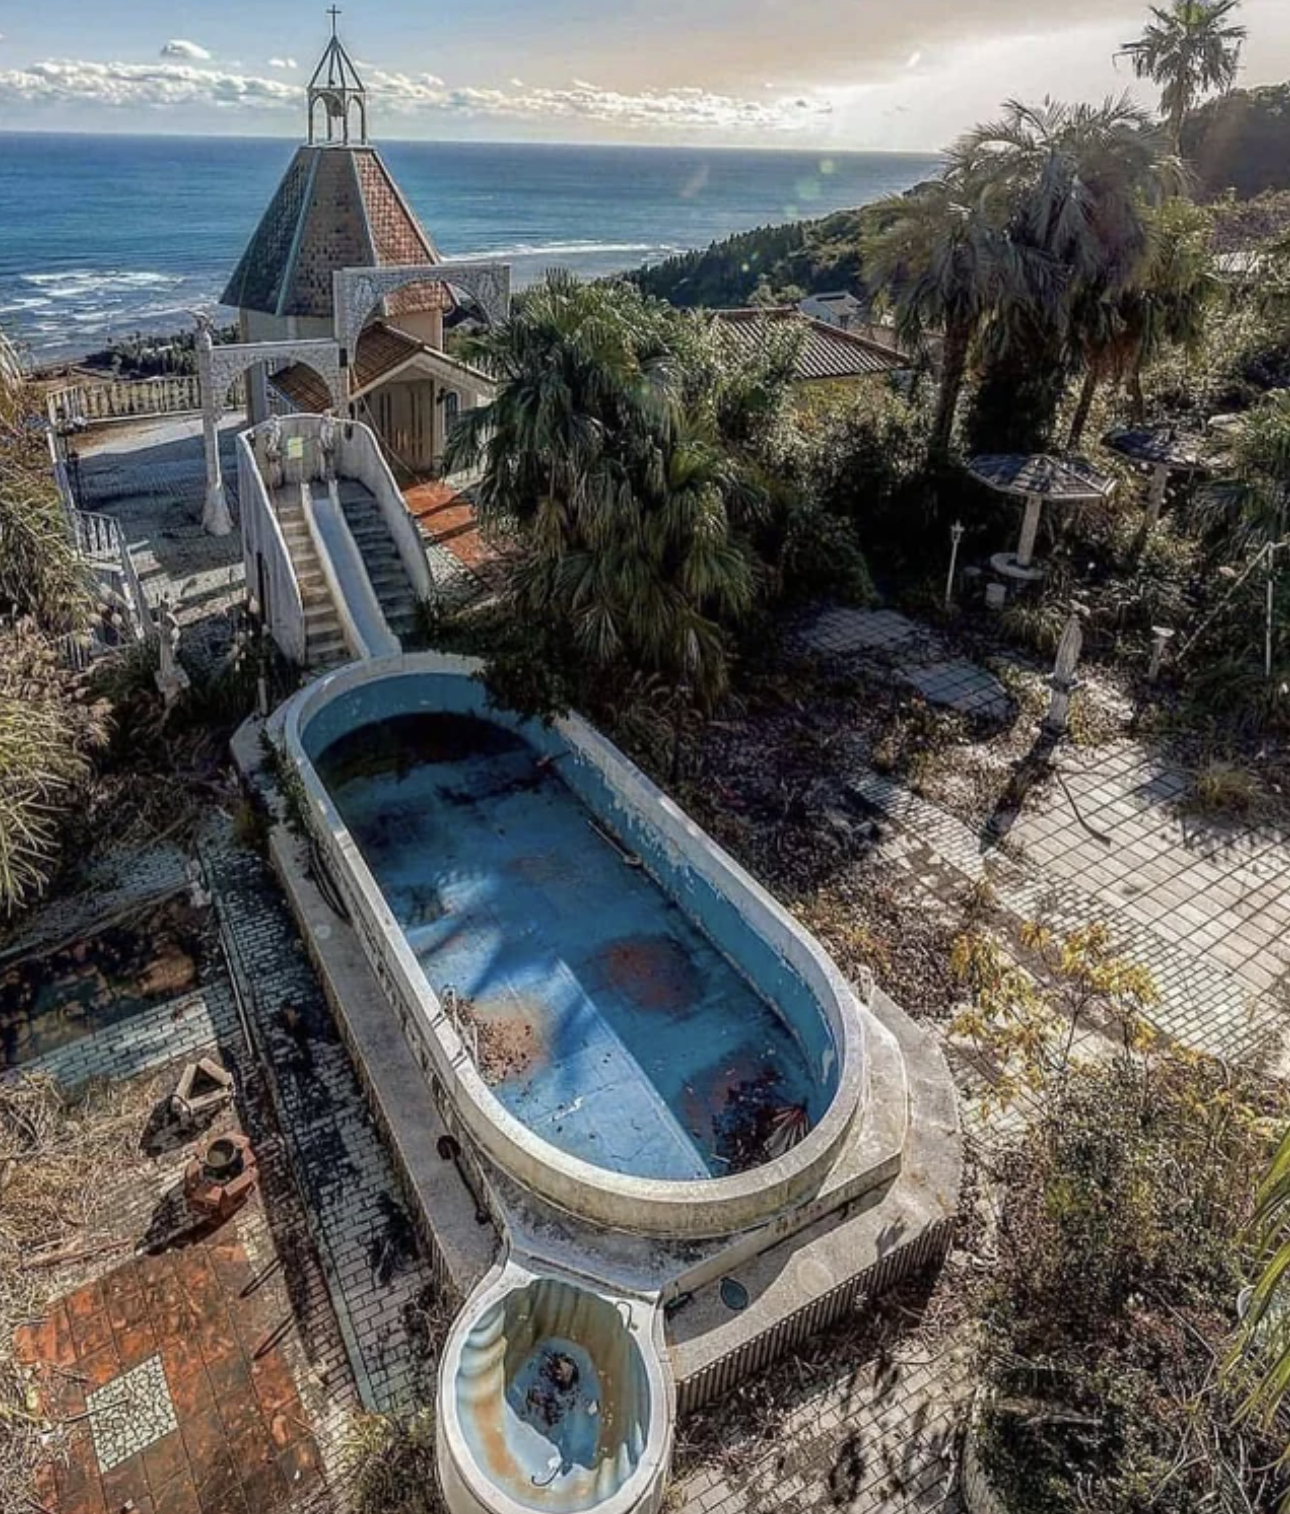 An abandoned resort